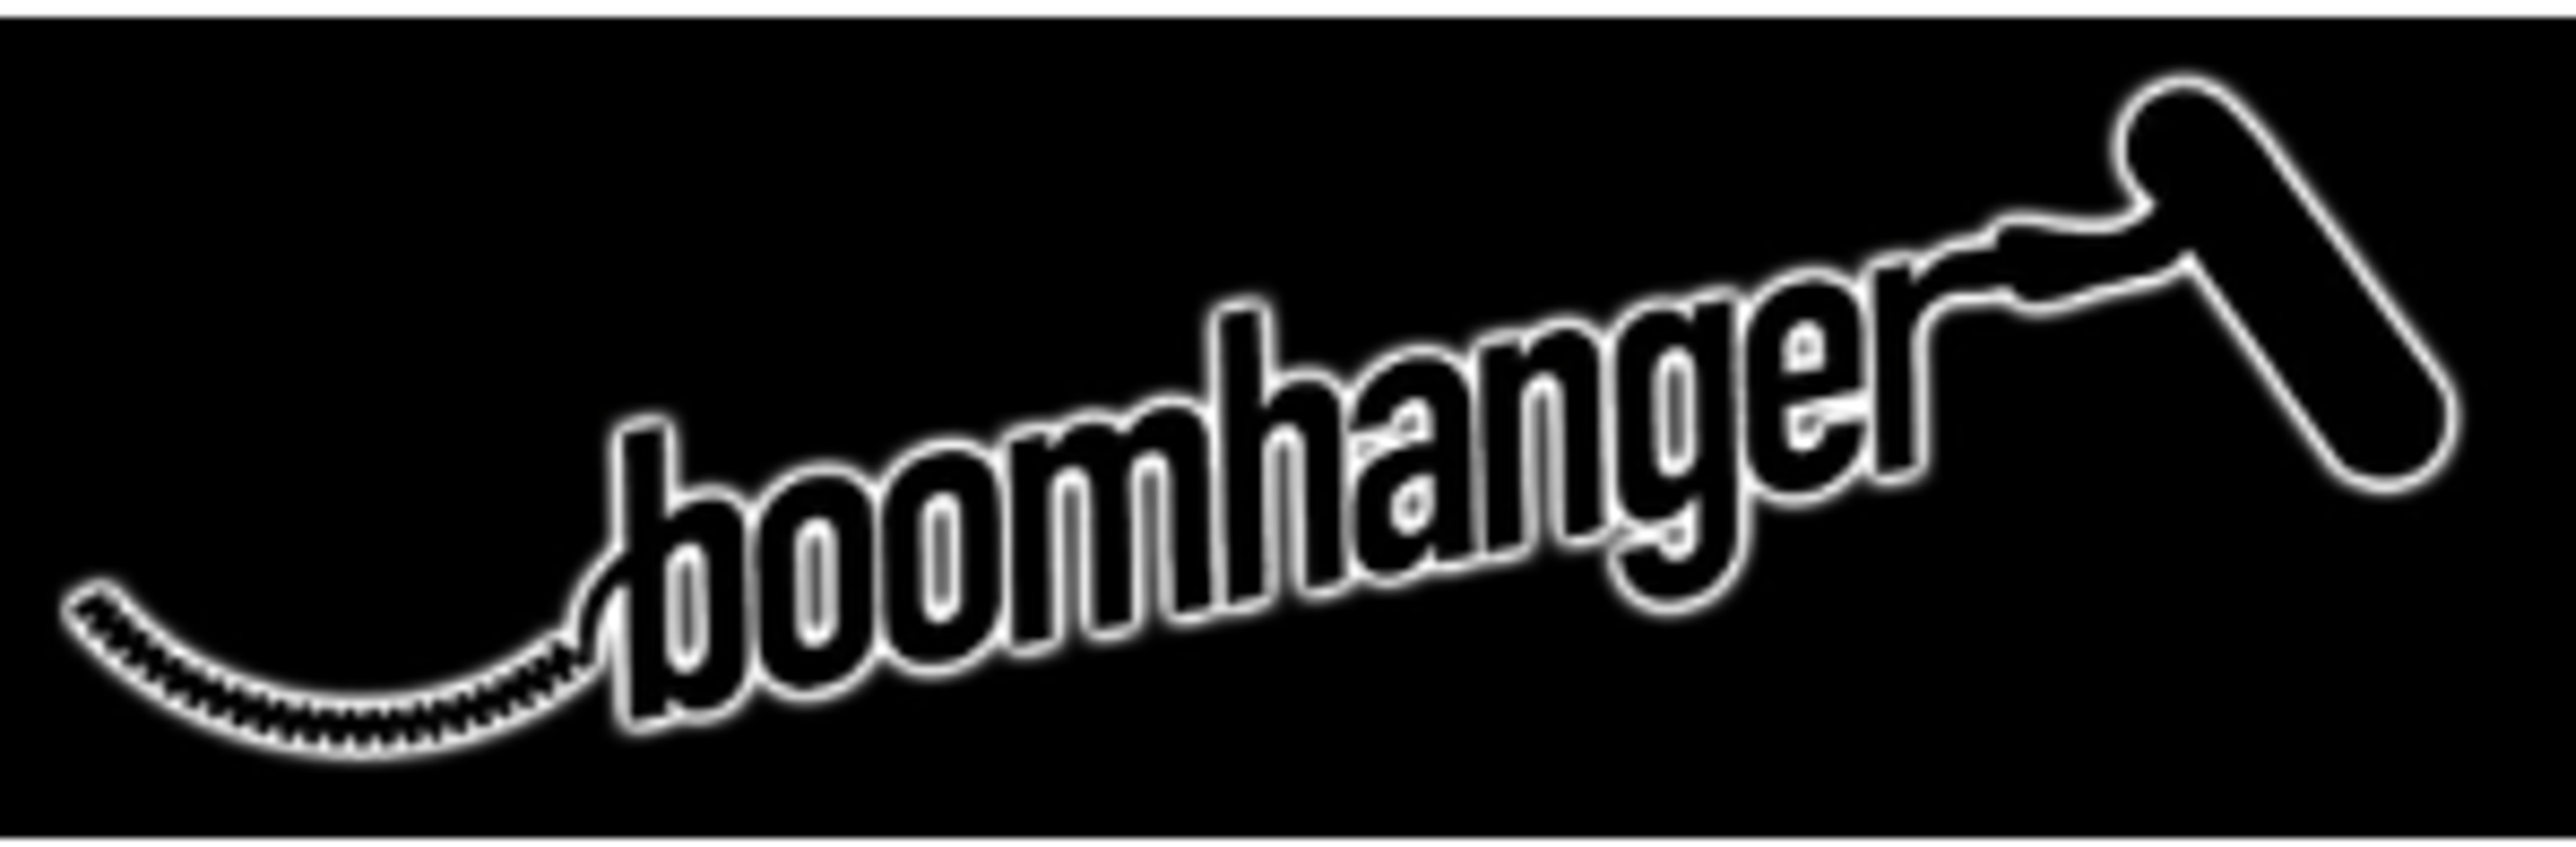 Boomhanger